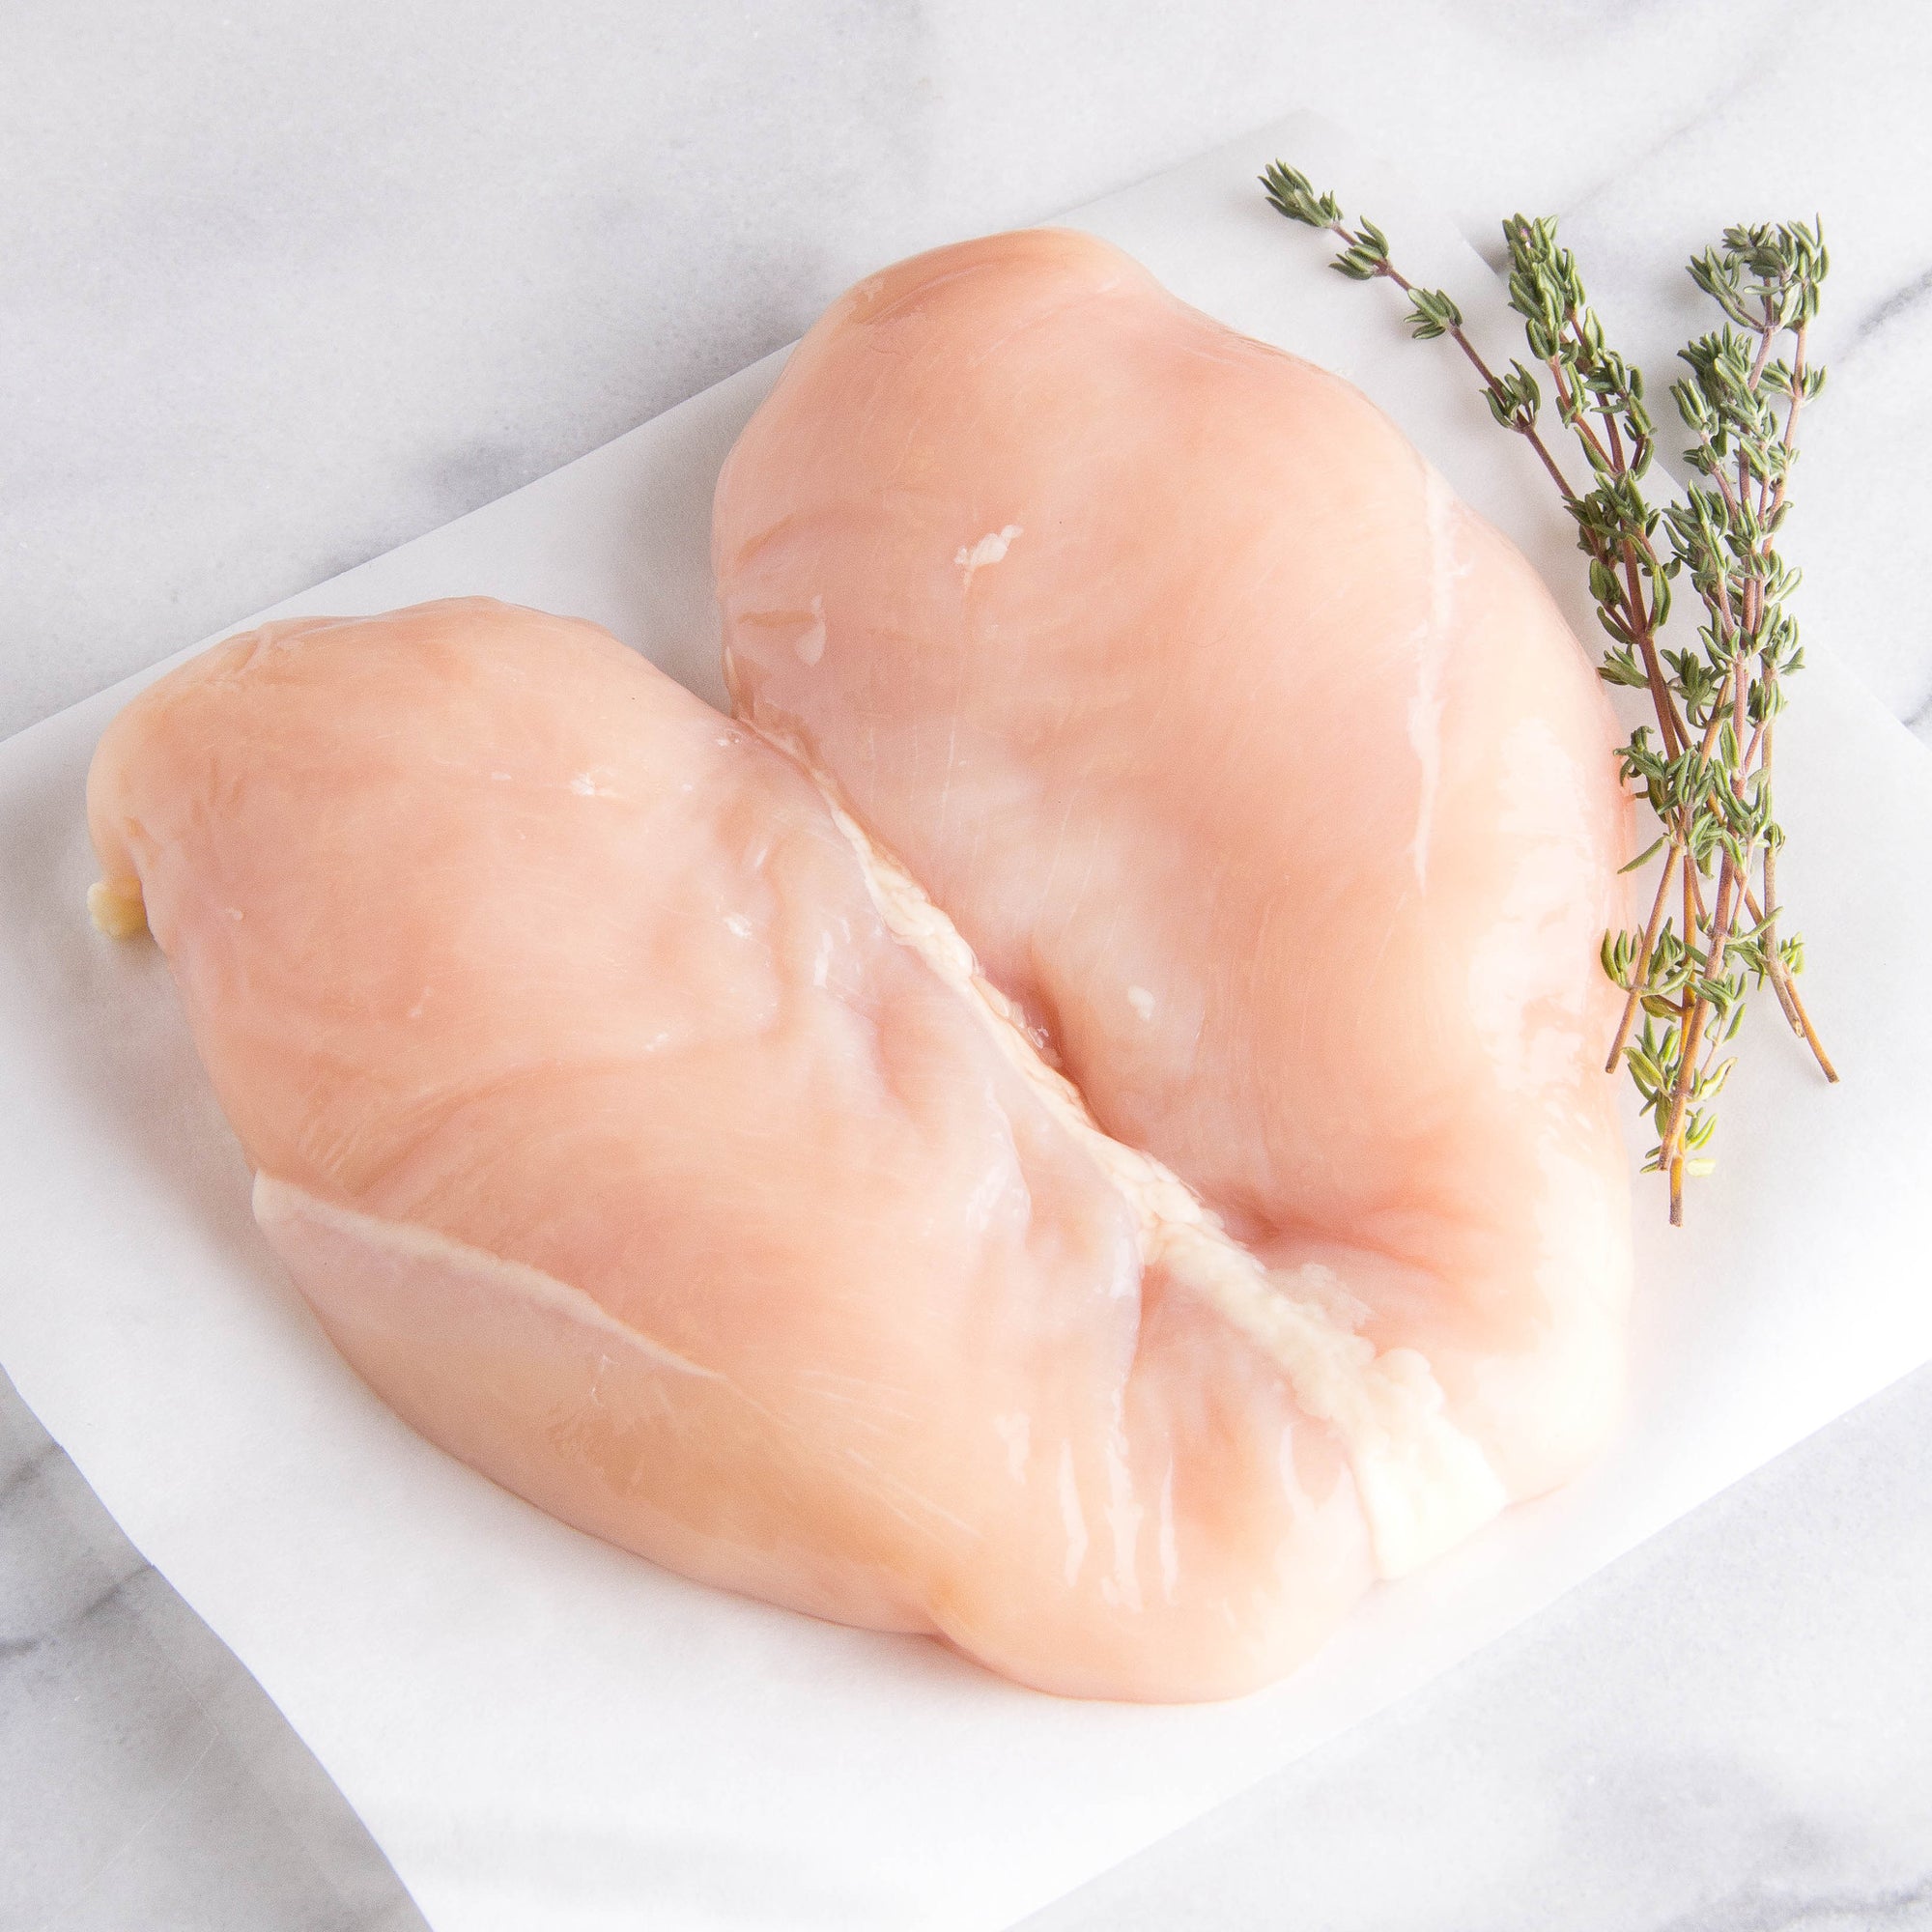 Boneless Skinless Chicken Breasts, 4 Breasts 